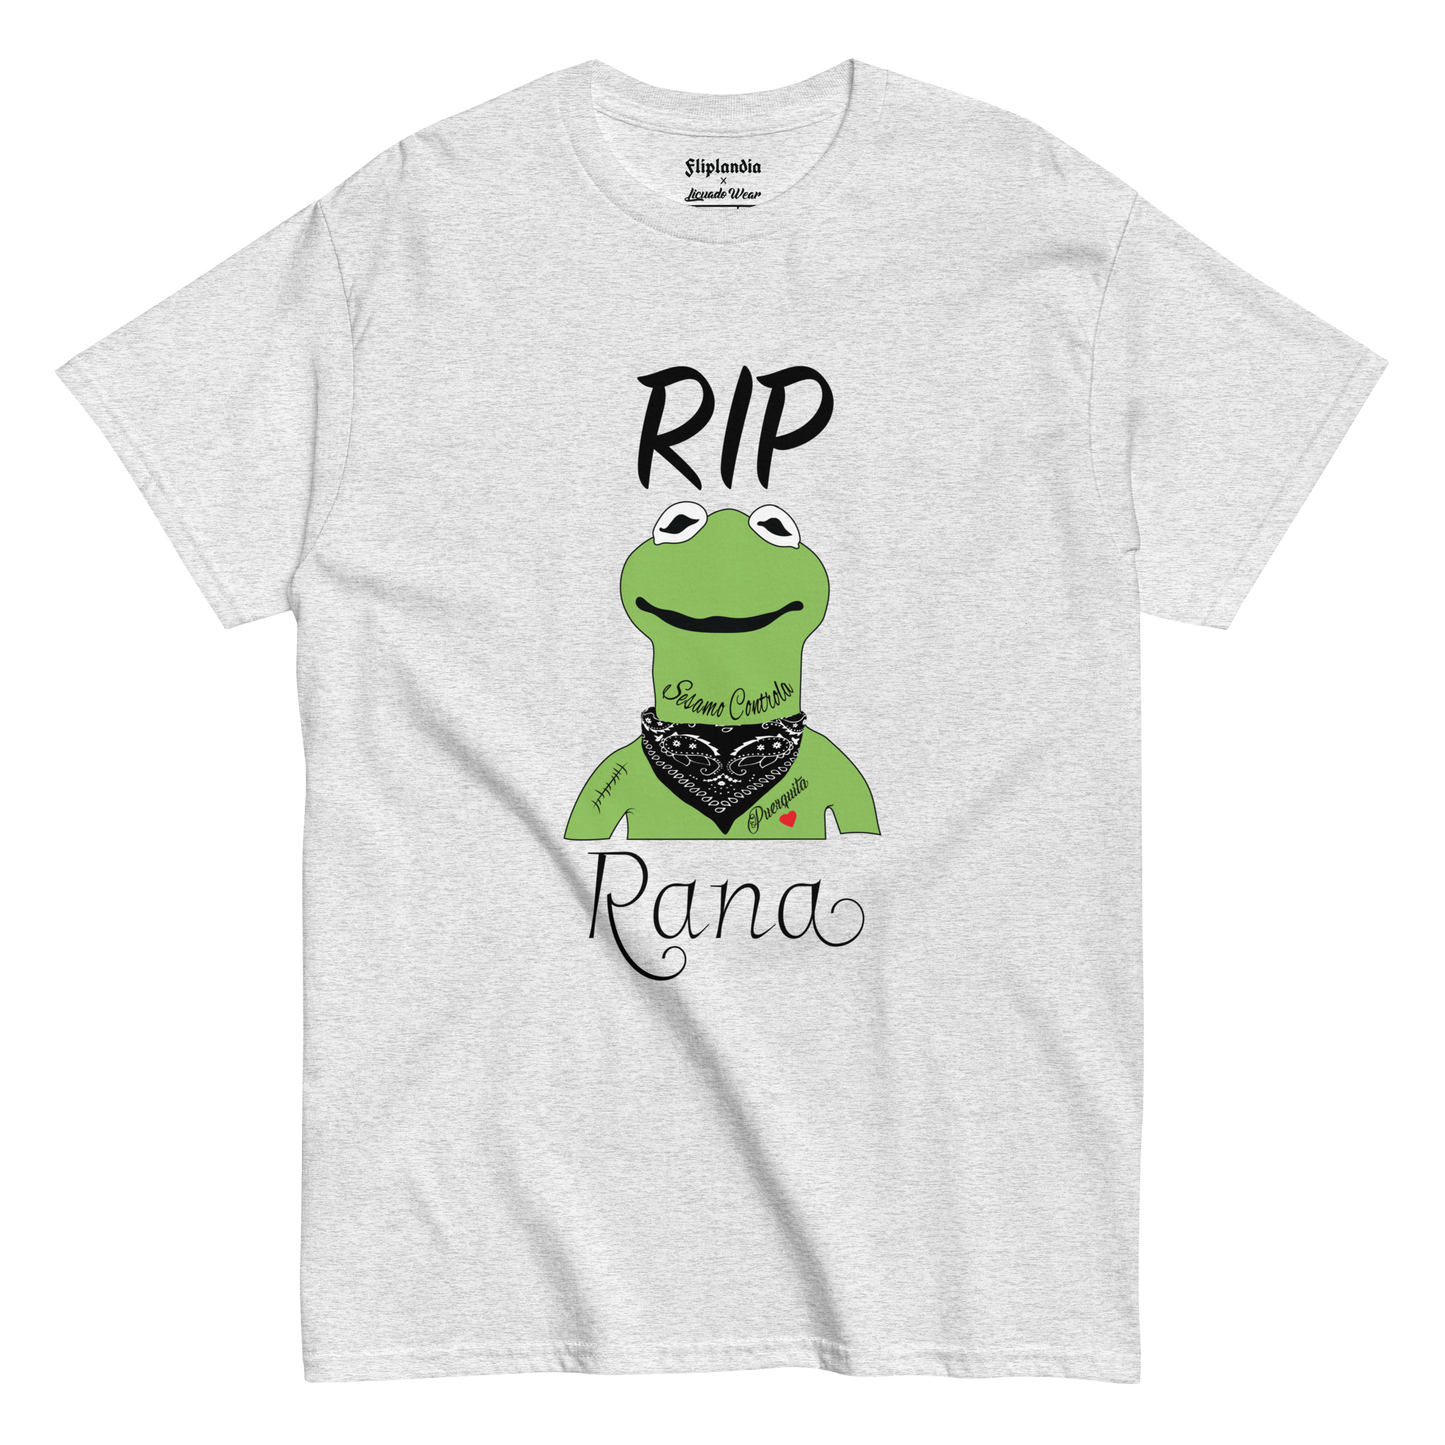 RIP Rana - Fliplandia Unisex T-shirt